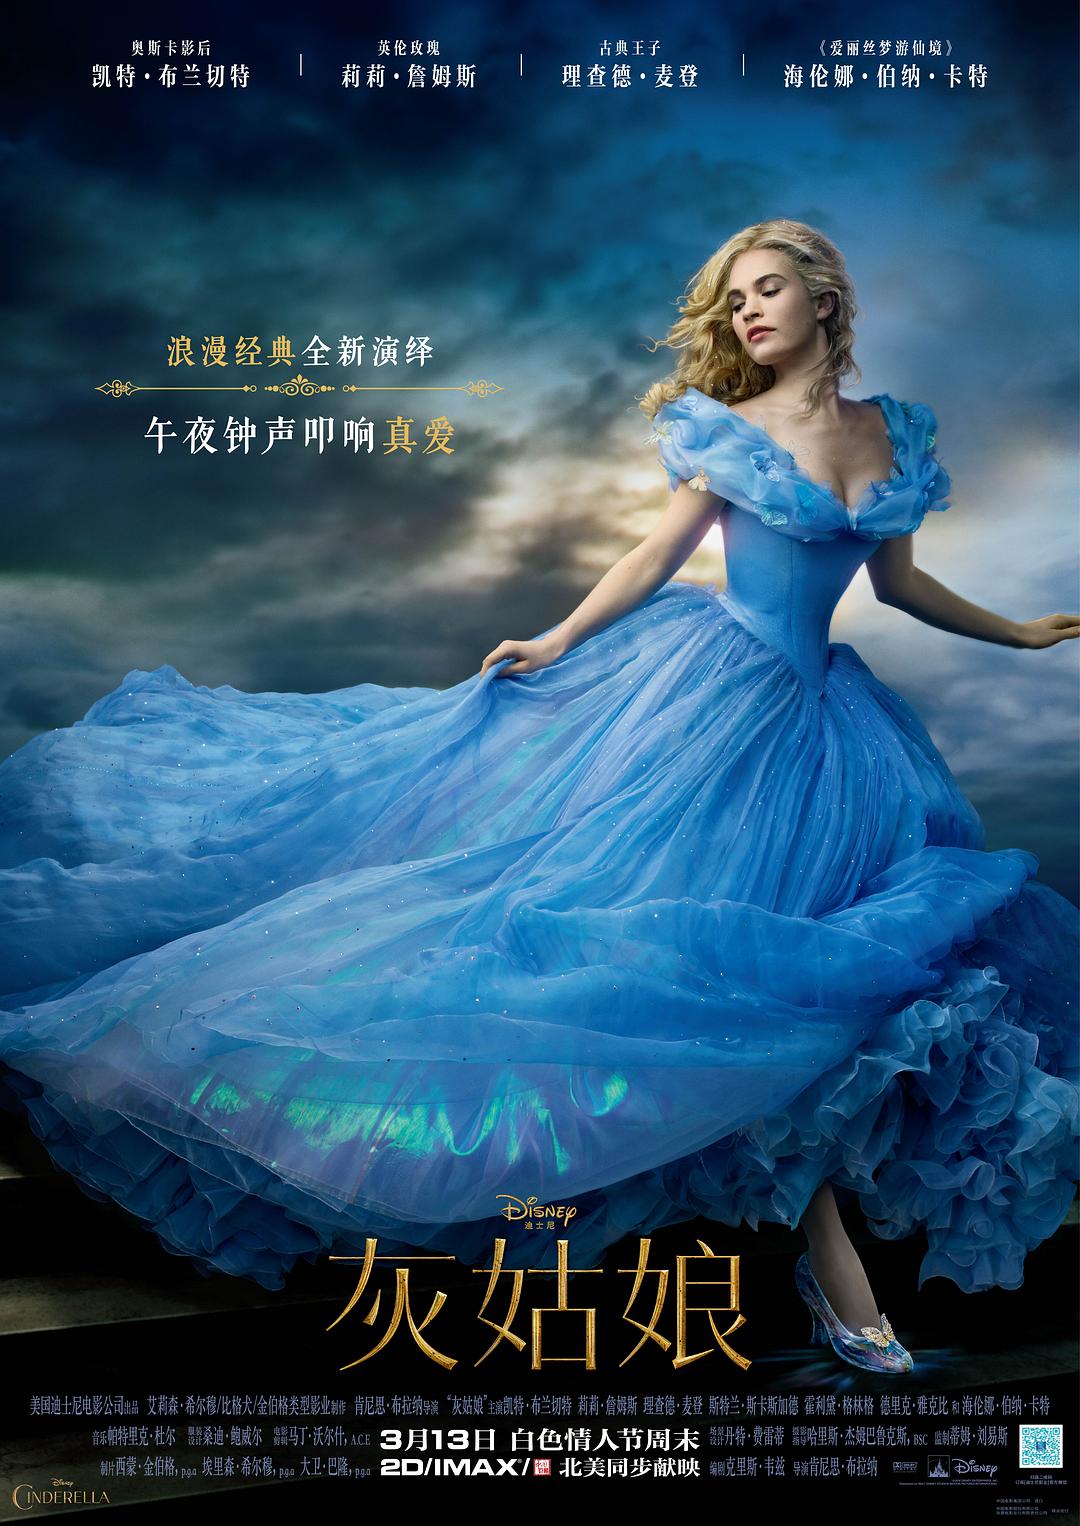 灰姑娘/仙履奇缘 Cinderella.2015.2160p.BluRay.x264.8bit.SDR.DTS-HD.MA.TrueHD.7.1.Atmos-SWTYBLZ 44.58GB-1.png